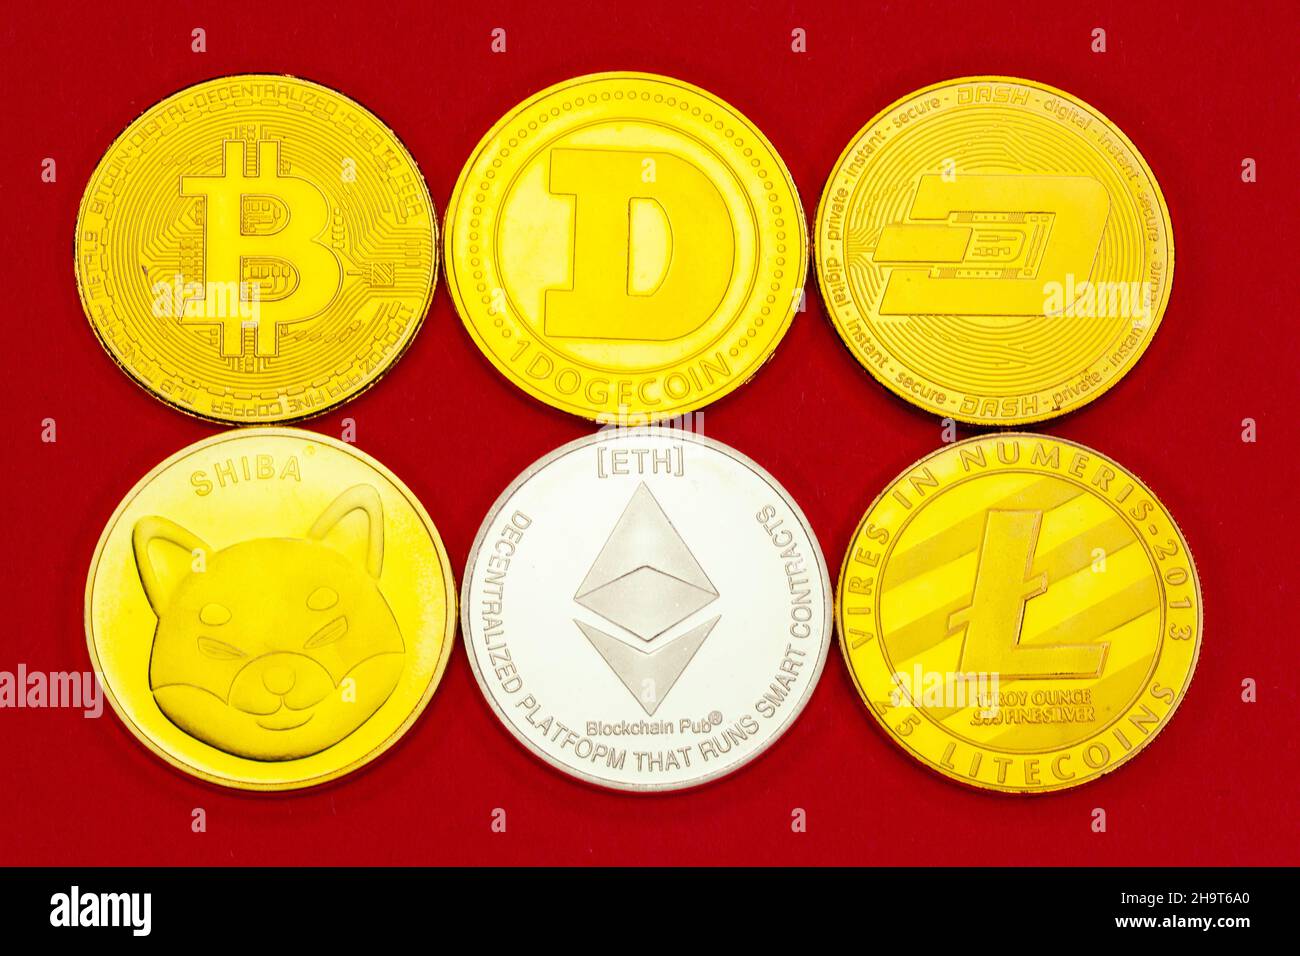 Monedas de criptomoneda Bitcoin, Doge, Dash, Shiba, Ethereum y Litecoin sobre un fondo de estudio rojo. Foto de stock